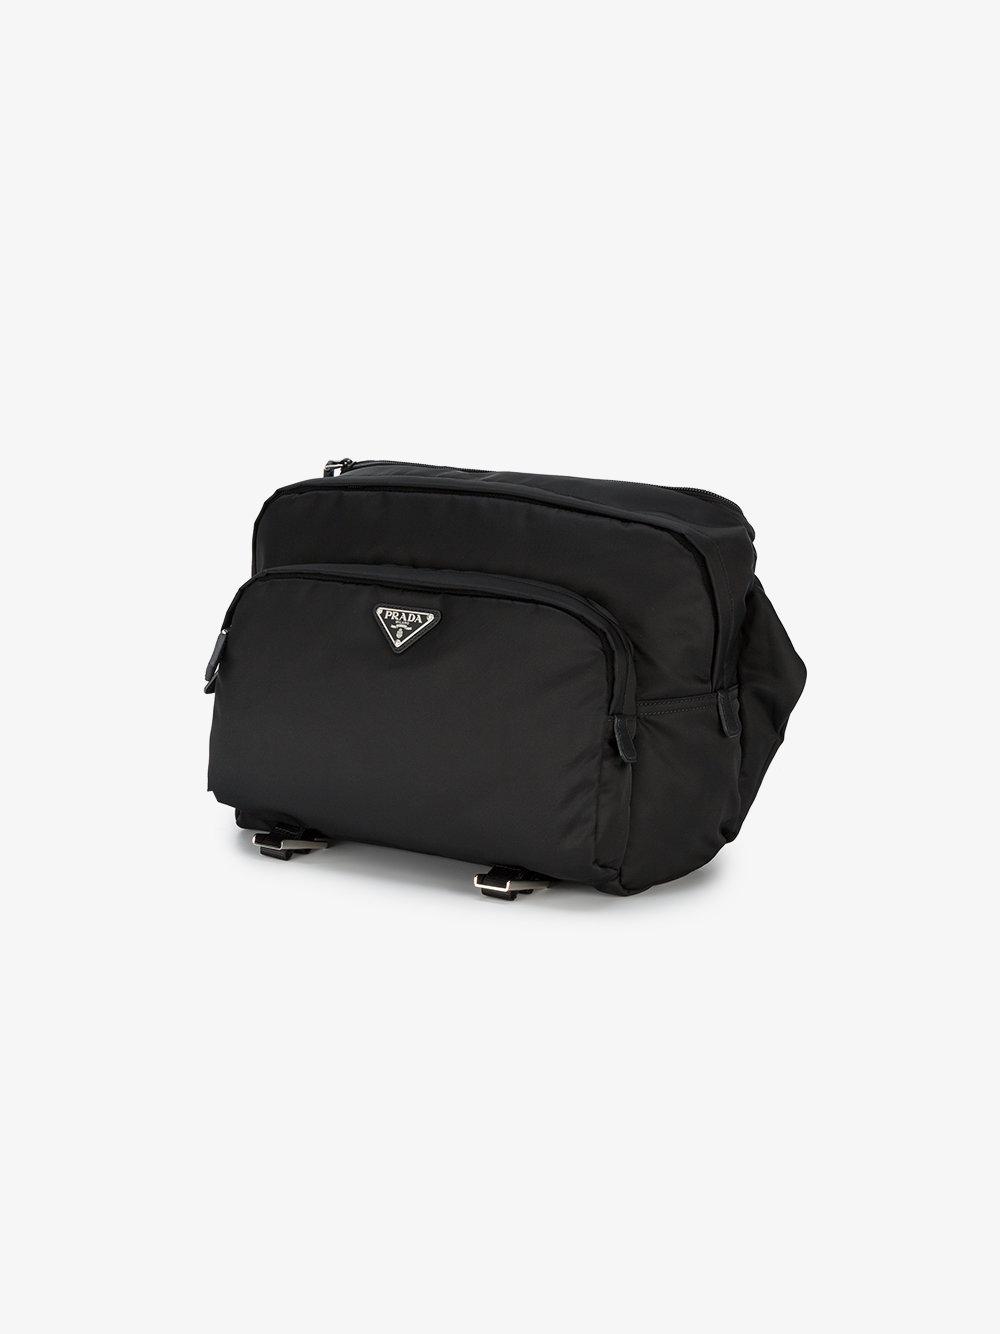 Prada Synthetic Nylon Large Cross Body Bag in Black for Men - Lyst